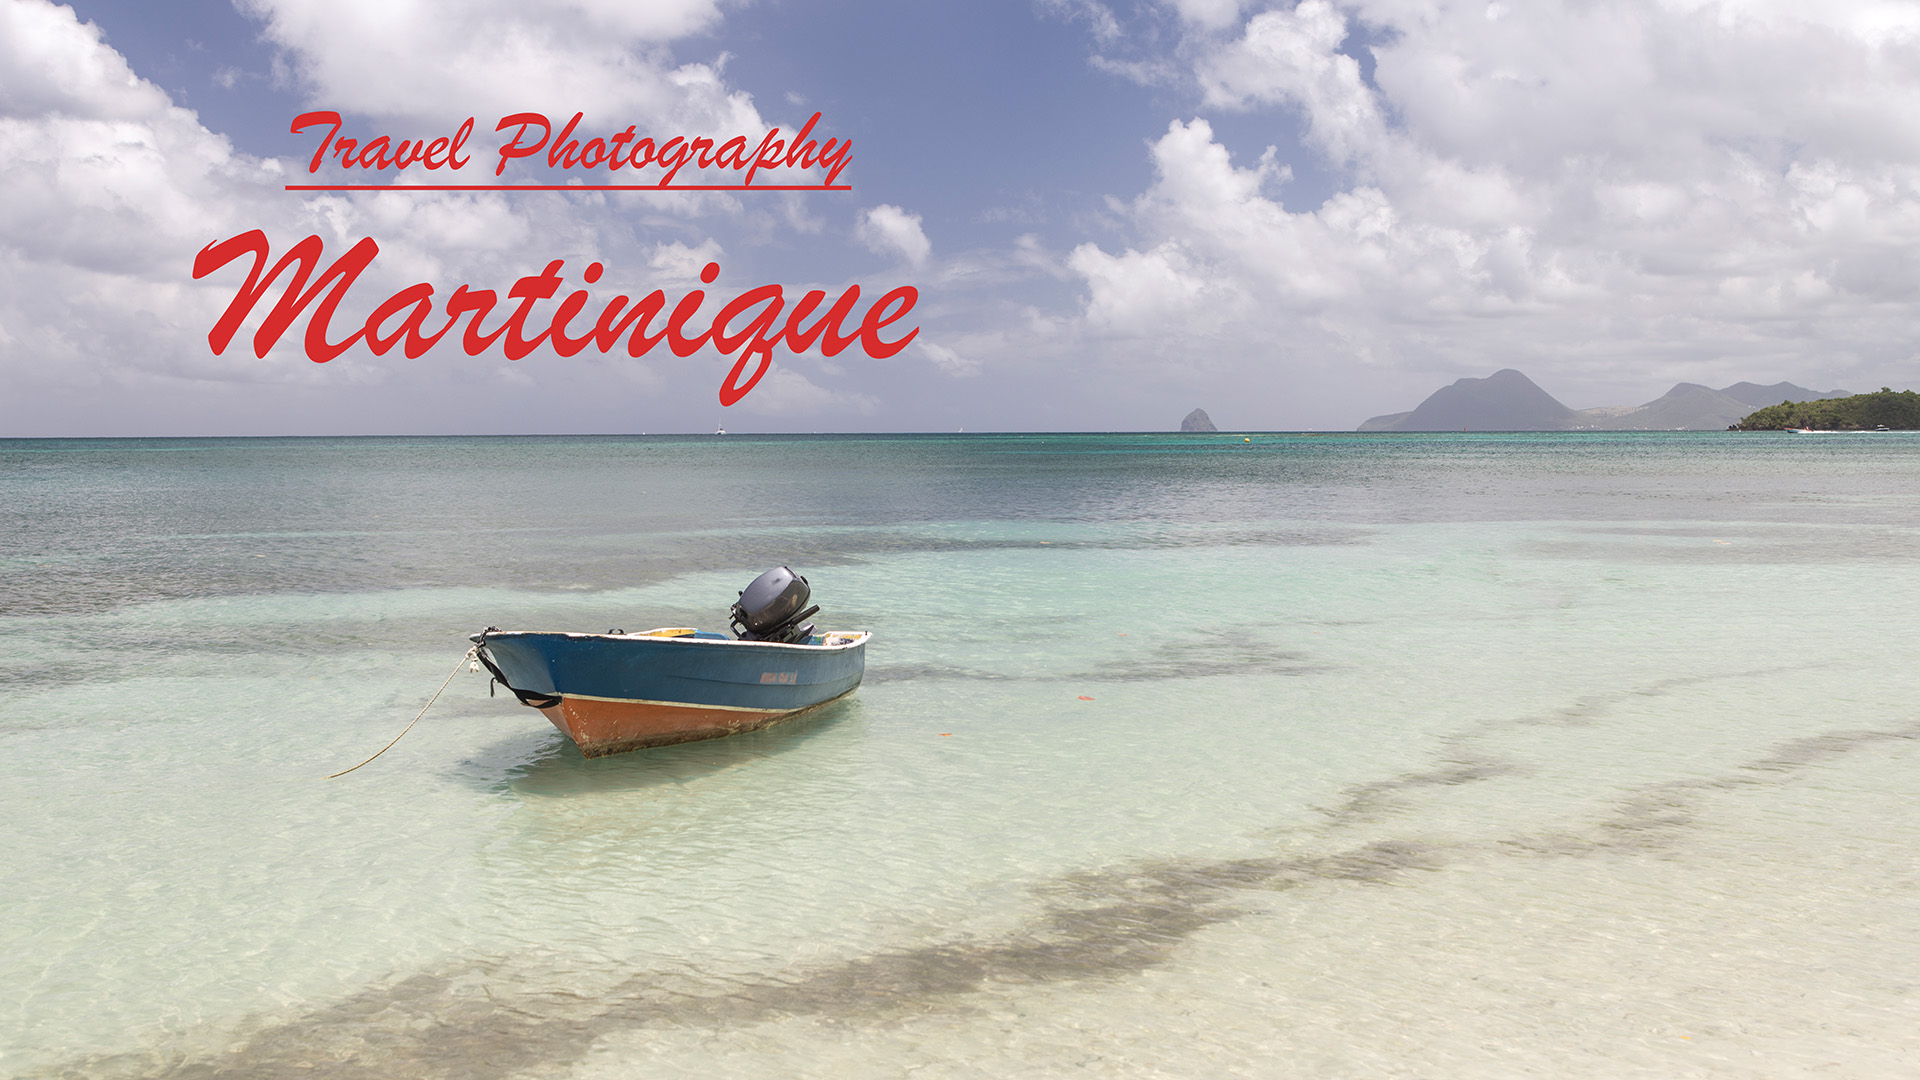 Martinique Island. Travel photography vlog.